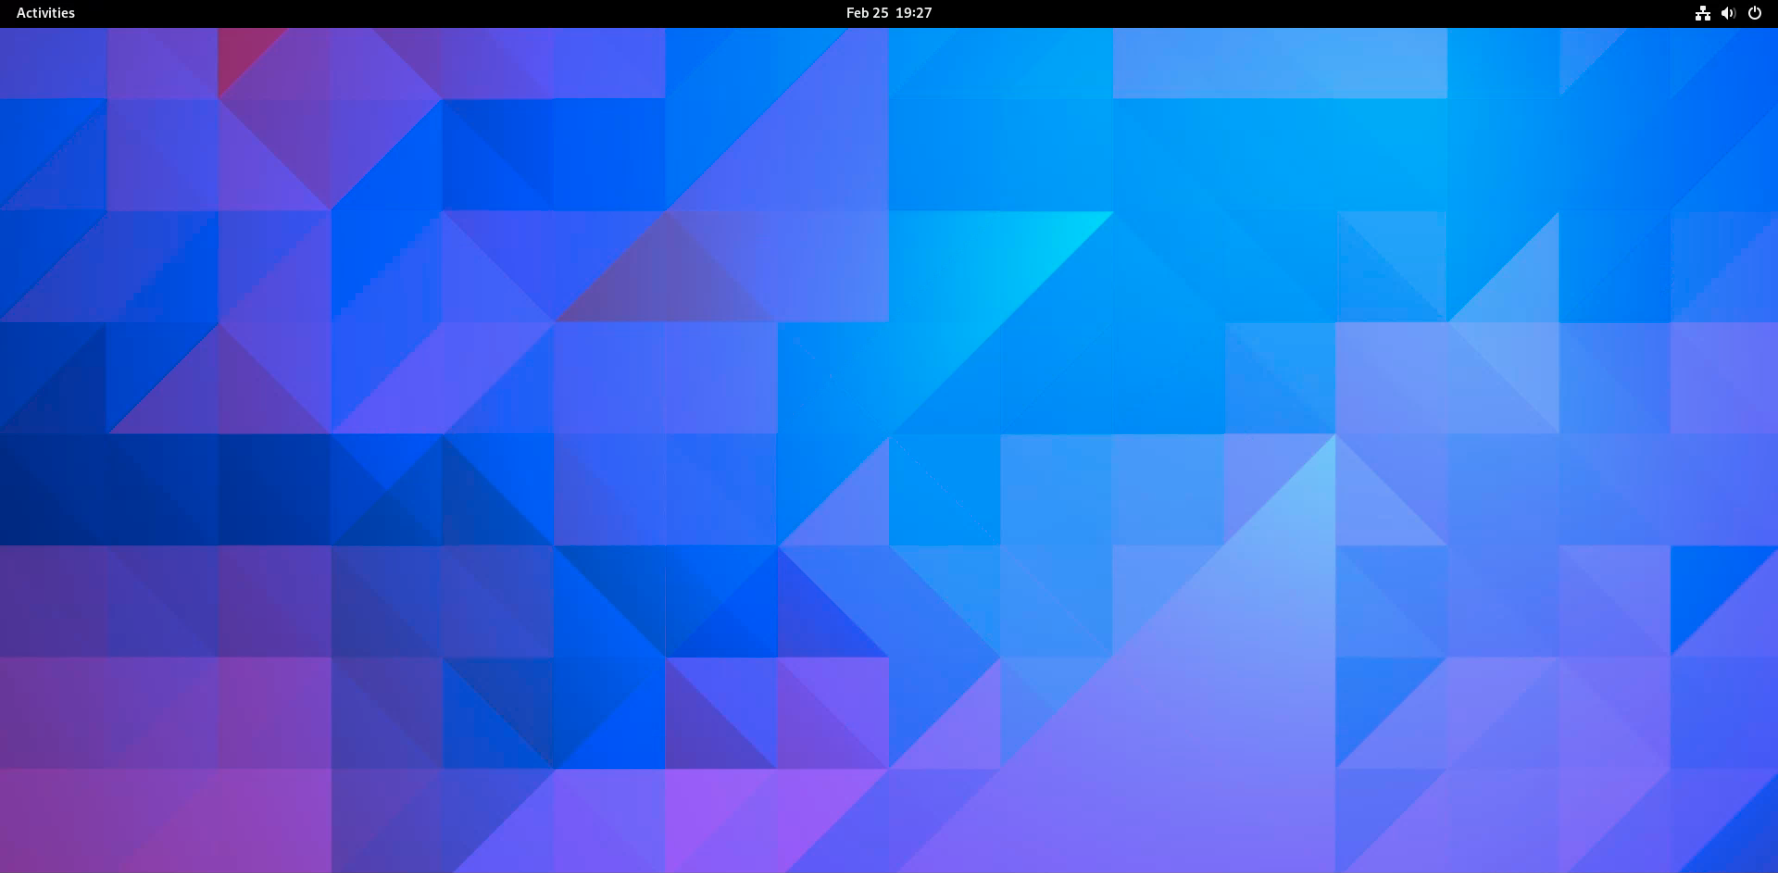 gnome 44.7 desktop on fedora 38